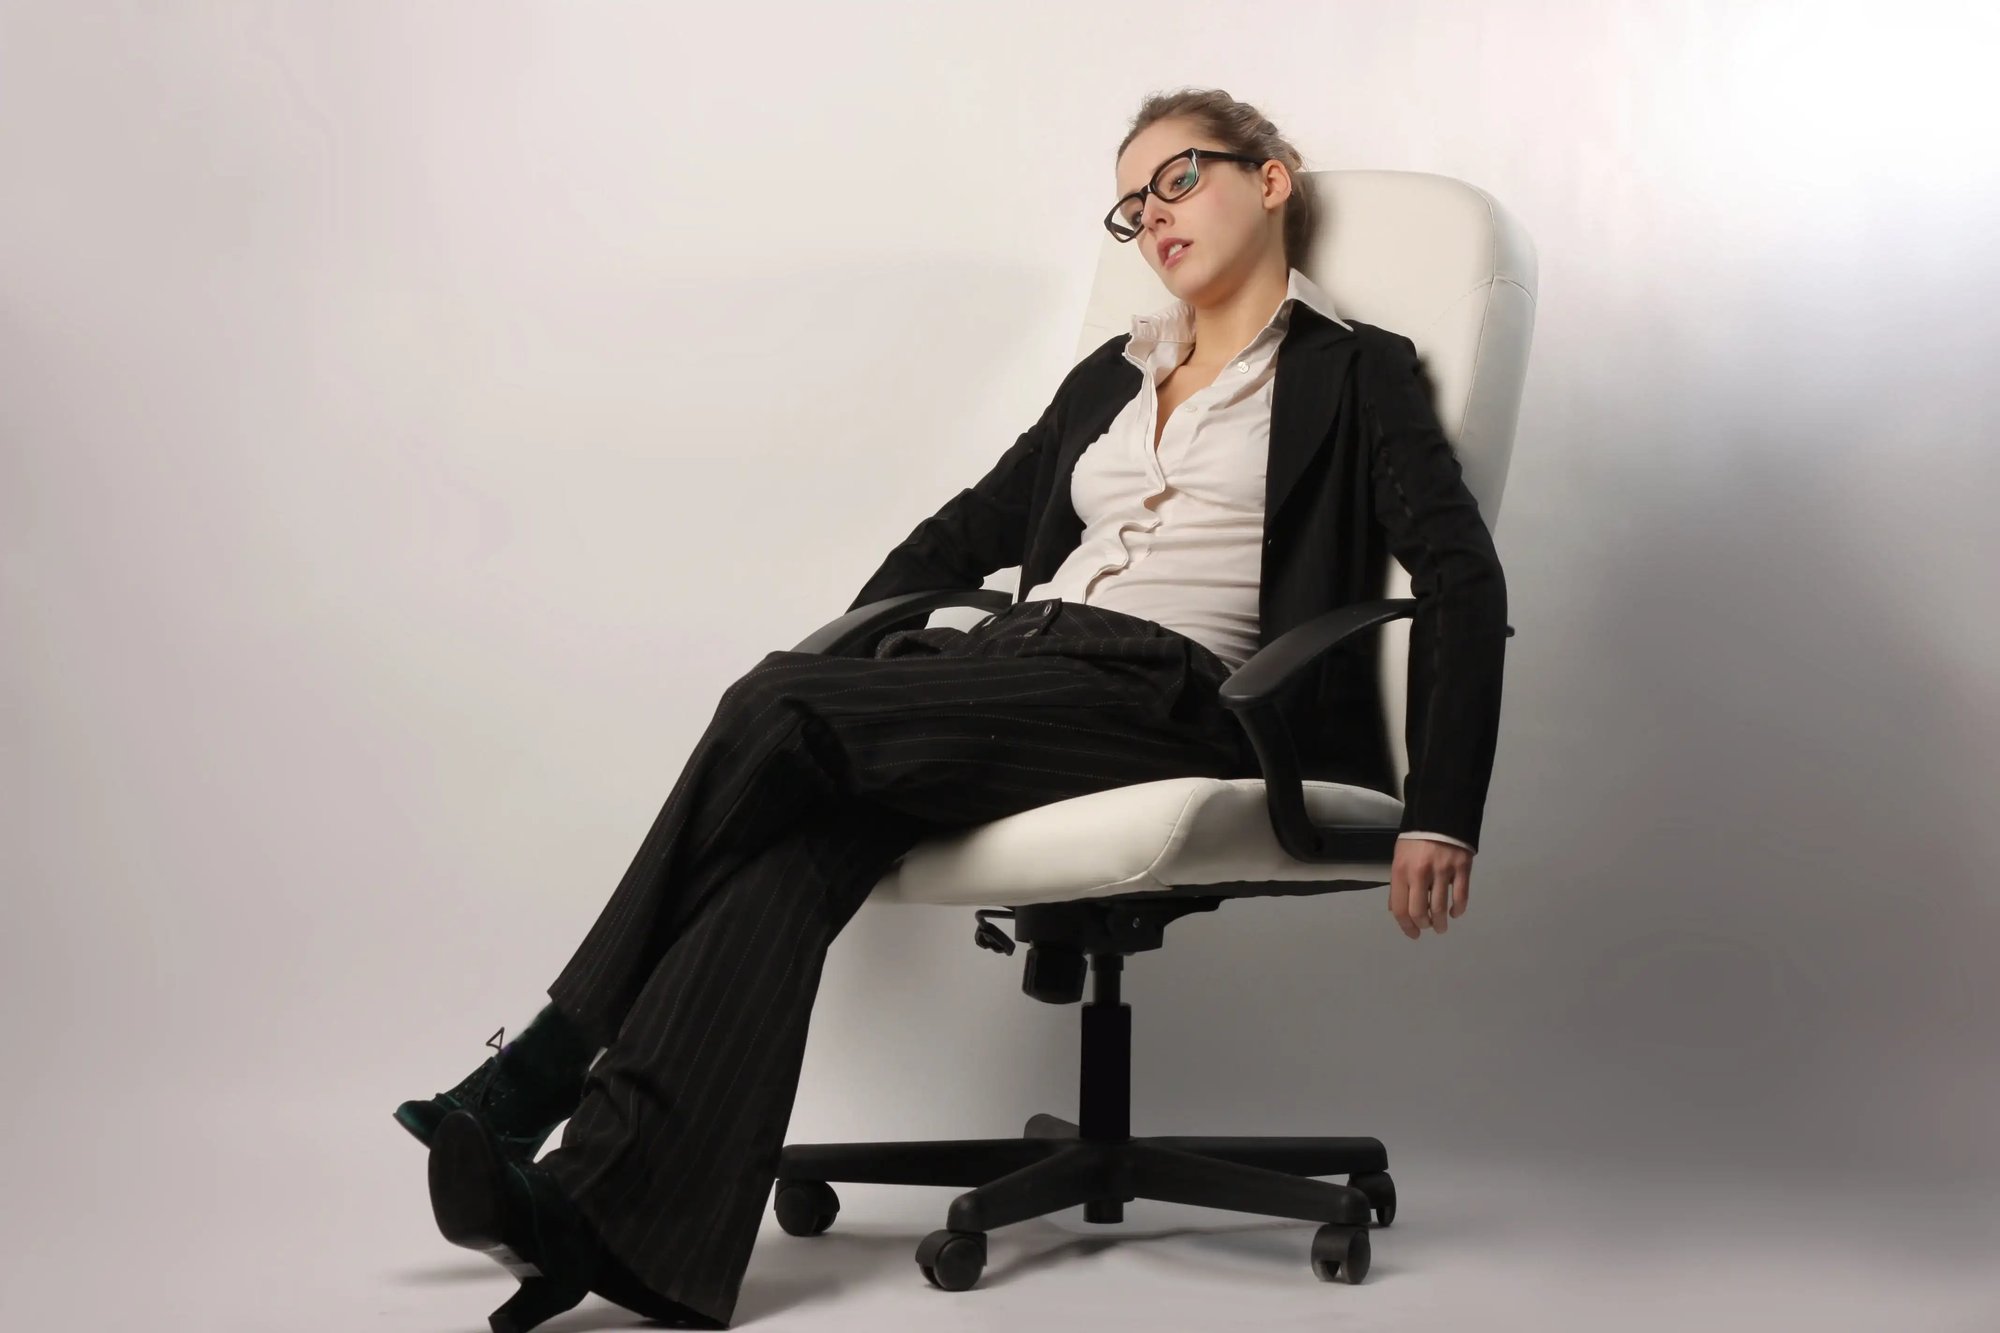 career burnout or wrong job woman tired